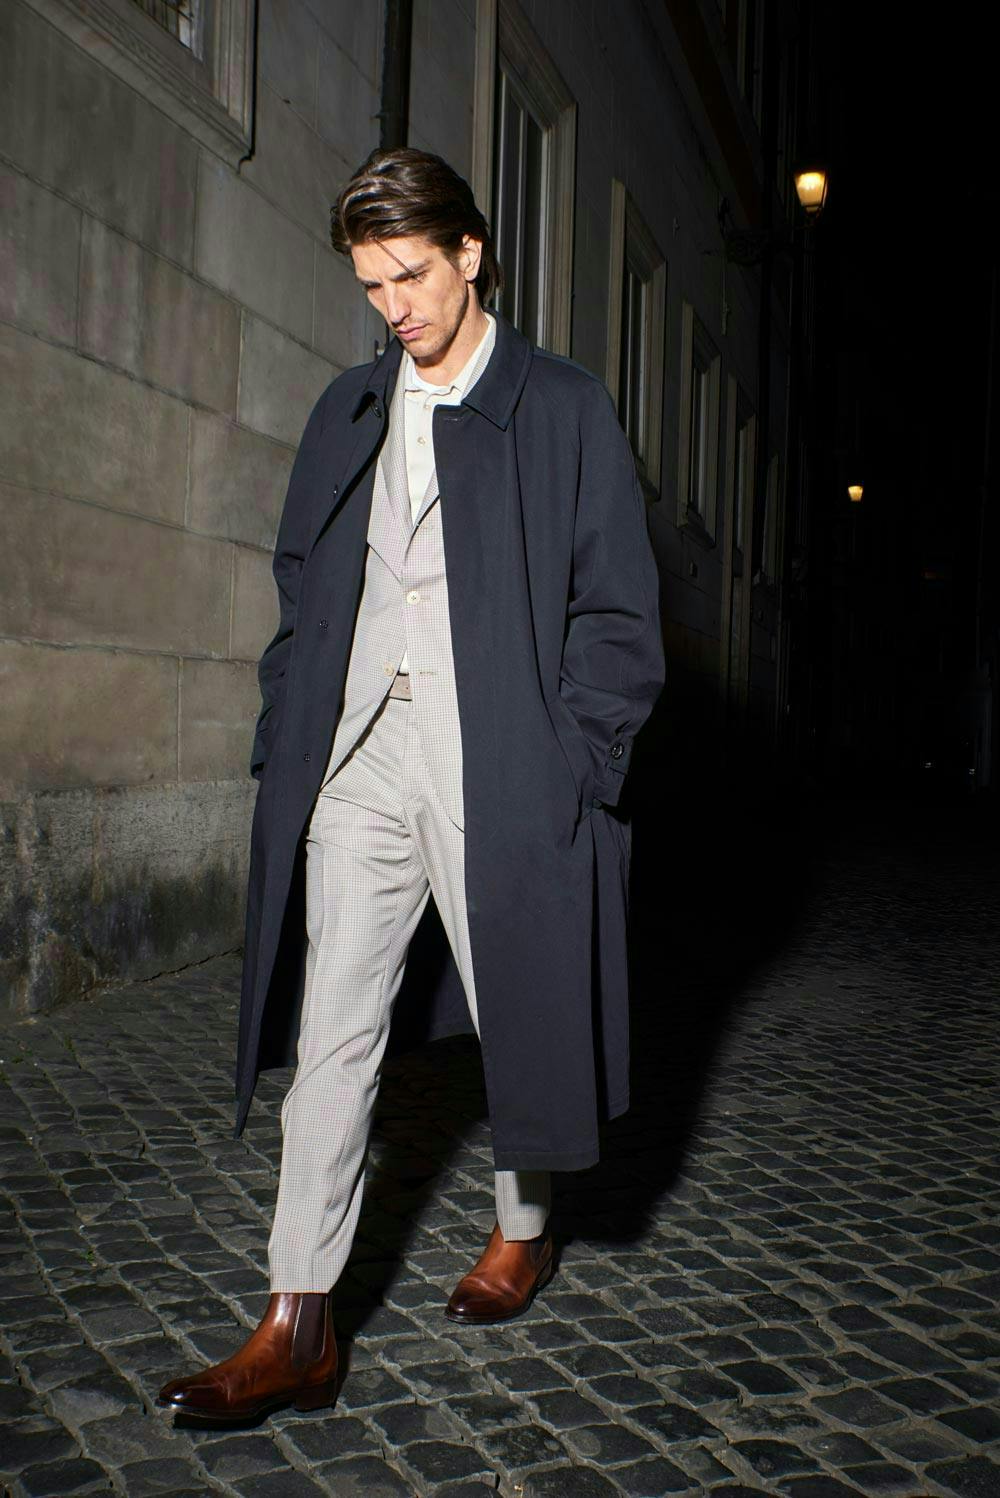 clothing apparel overcoat coat suit shoe footwear trench coat person human